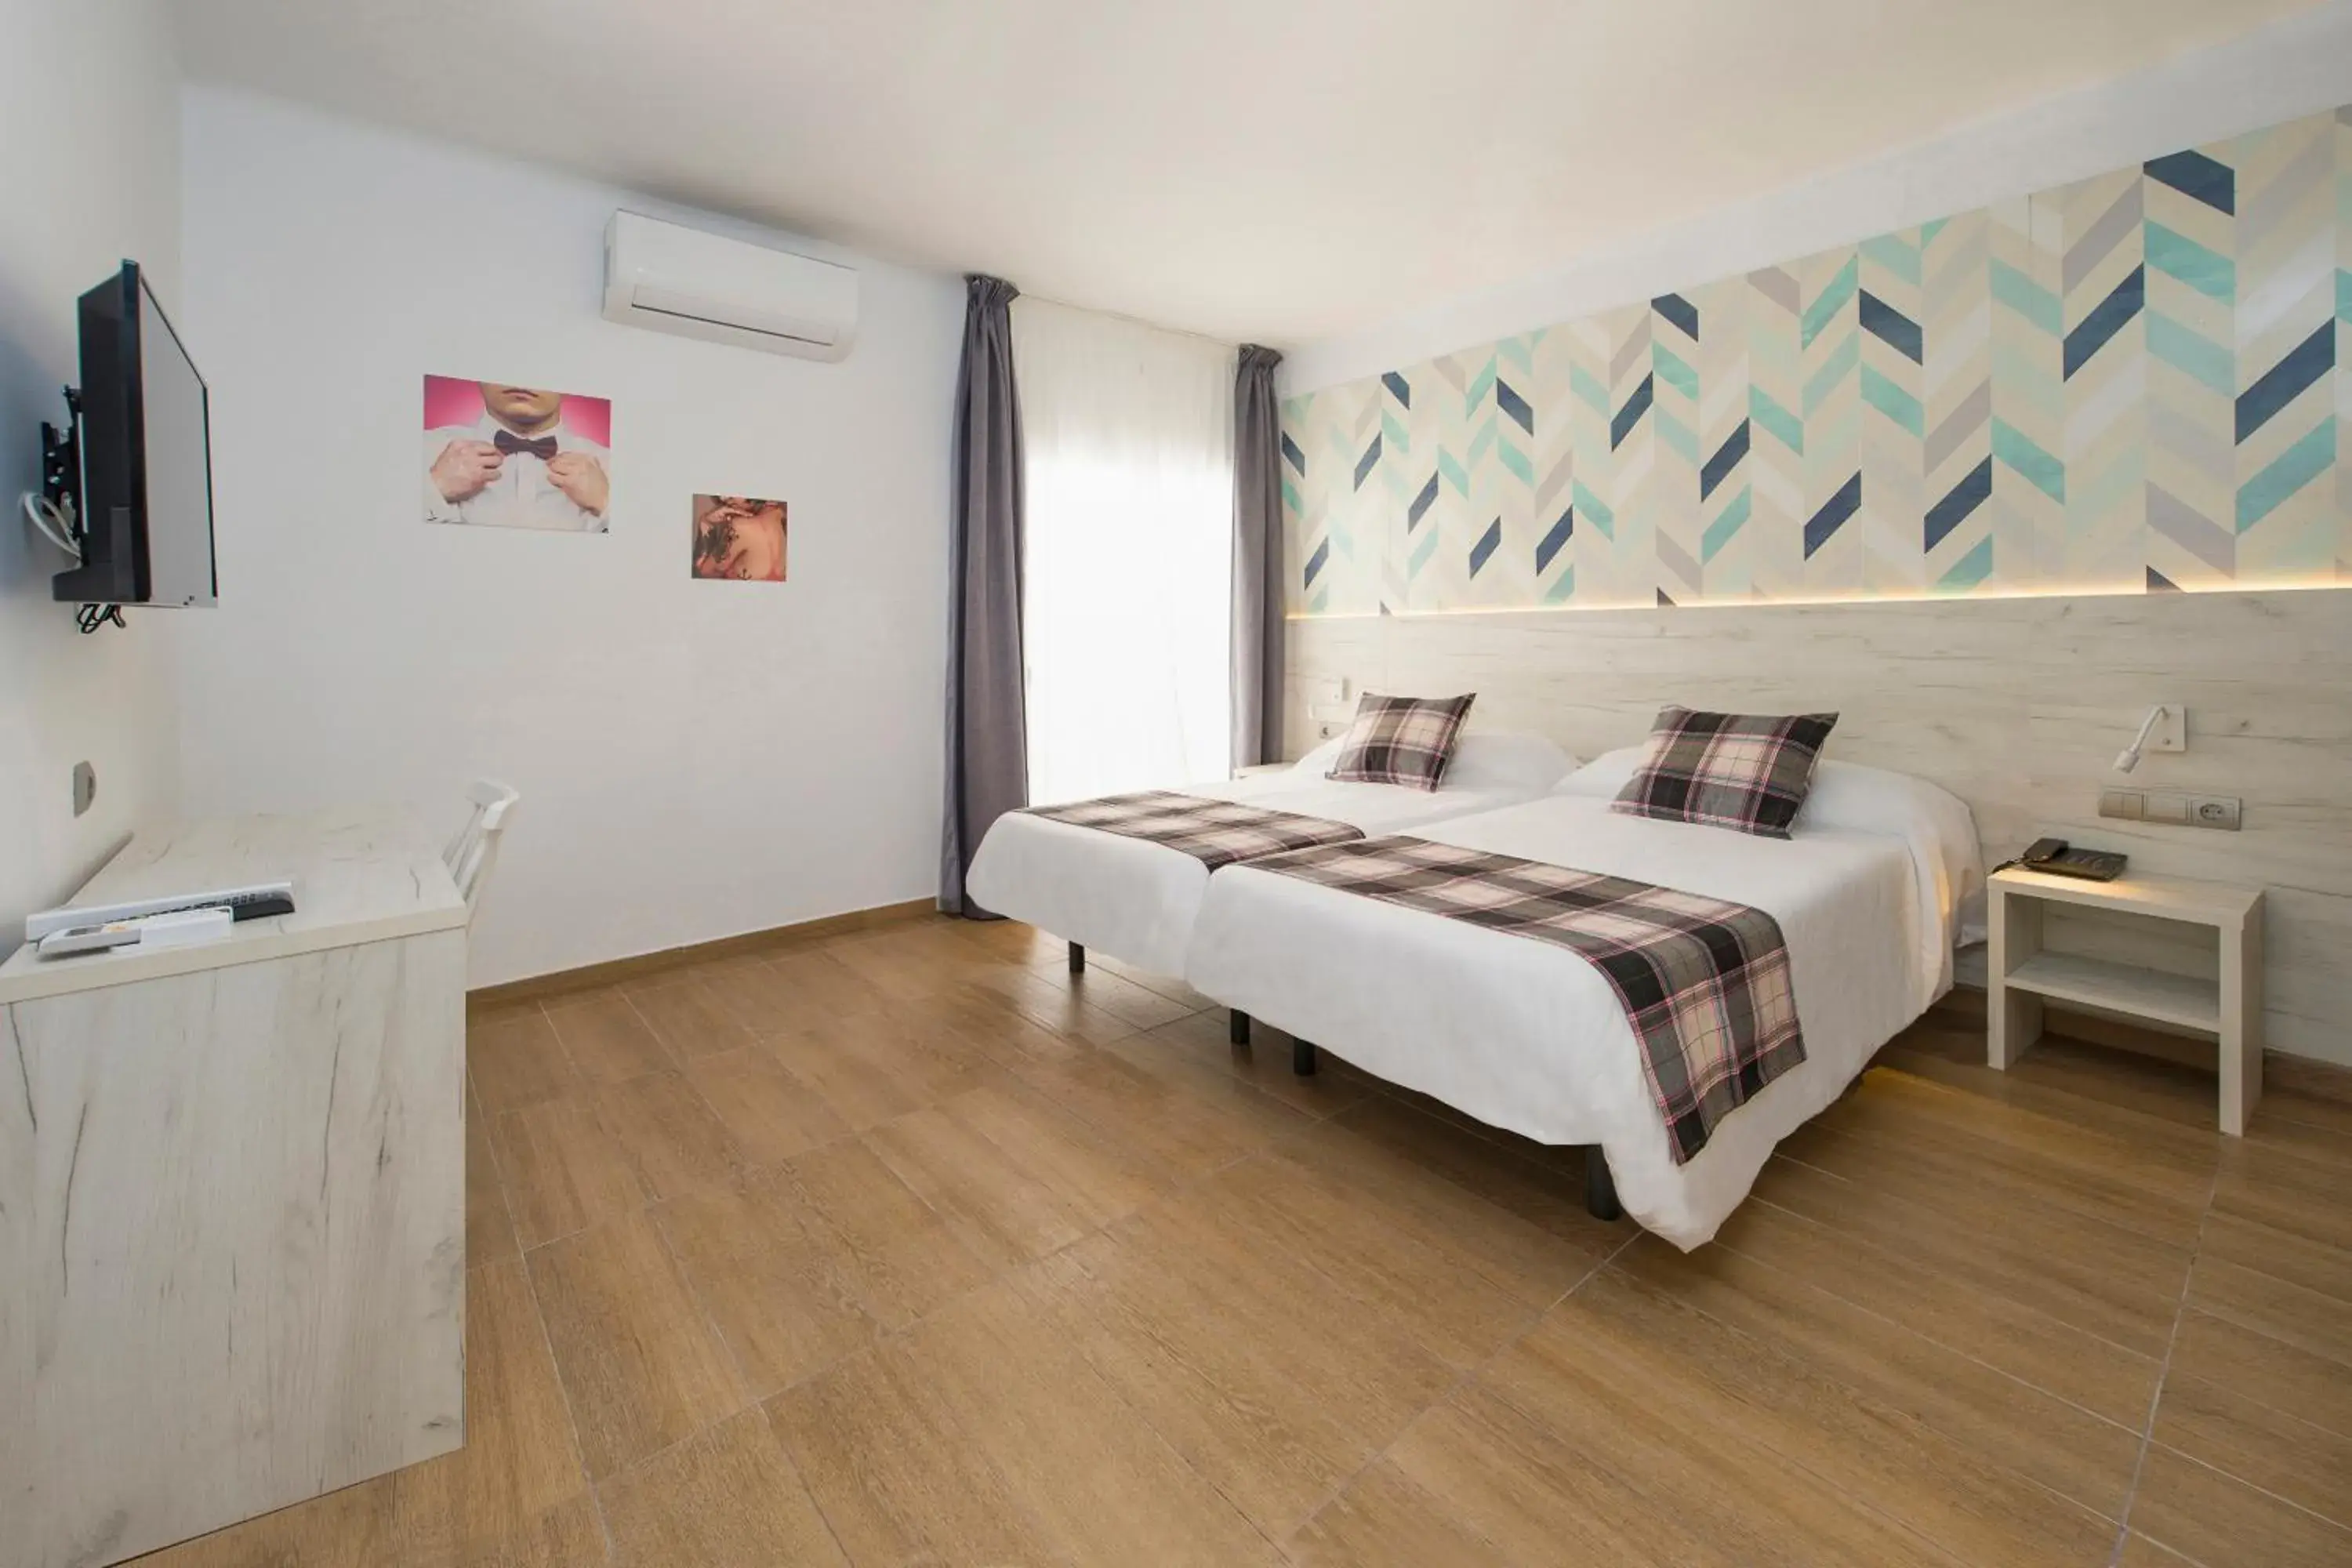 Bed, Room Photo in Hotel Vibra Lei Ibiza